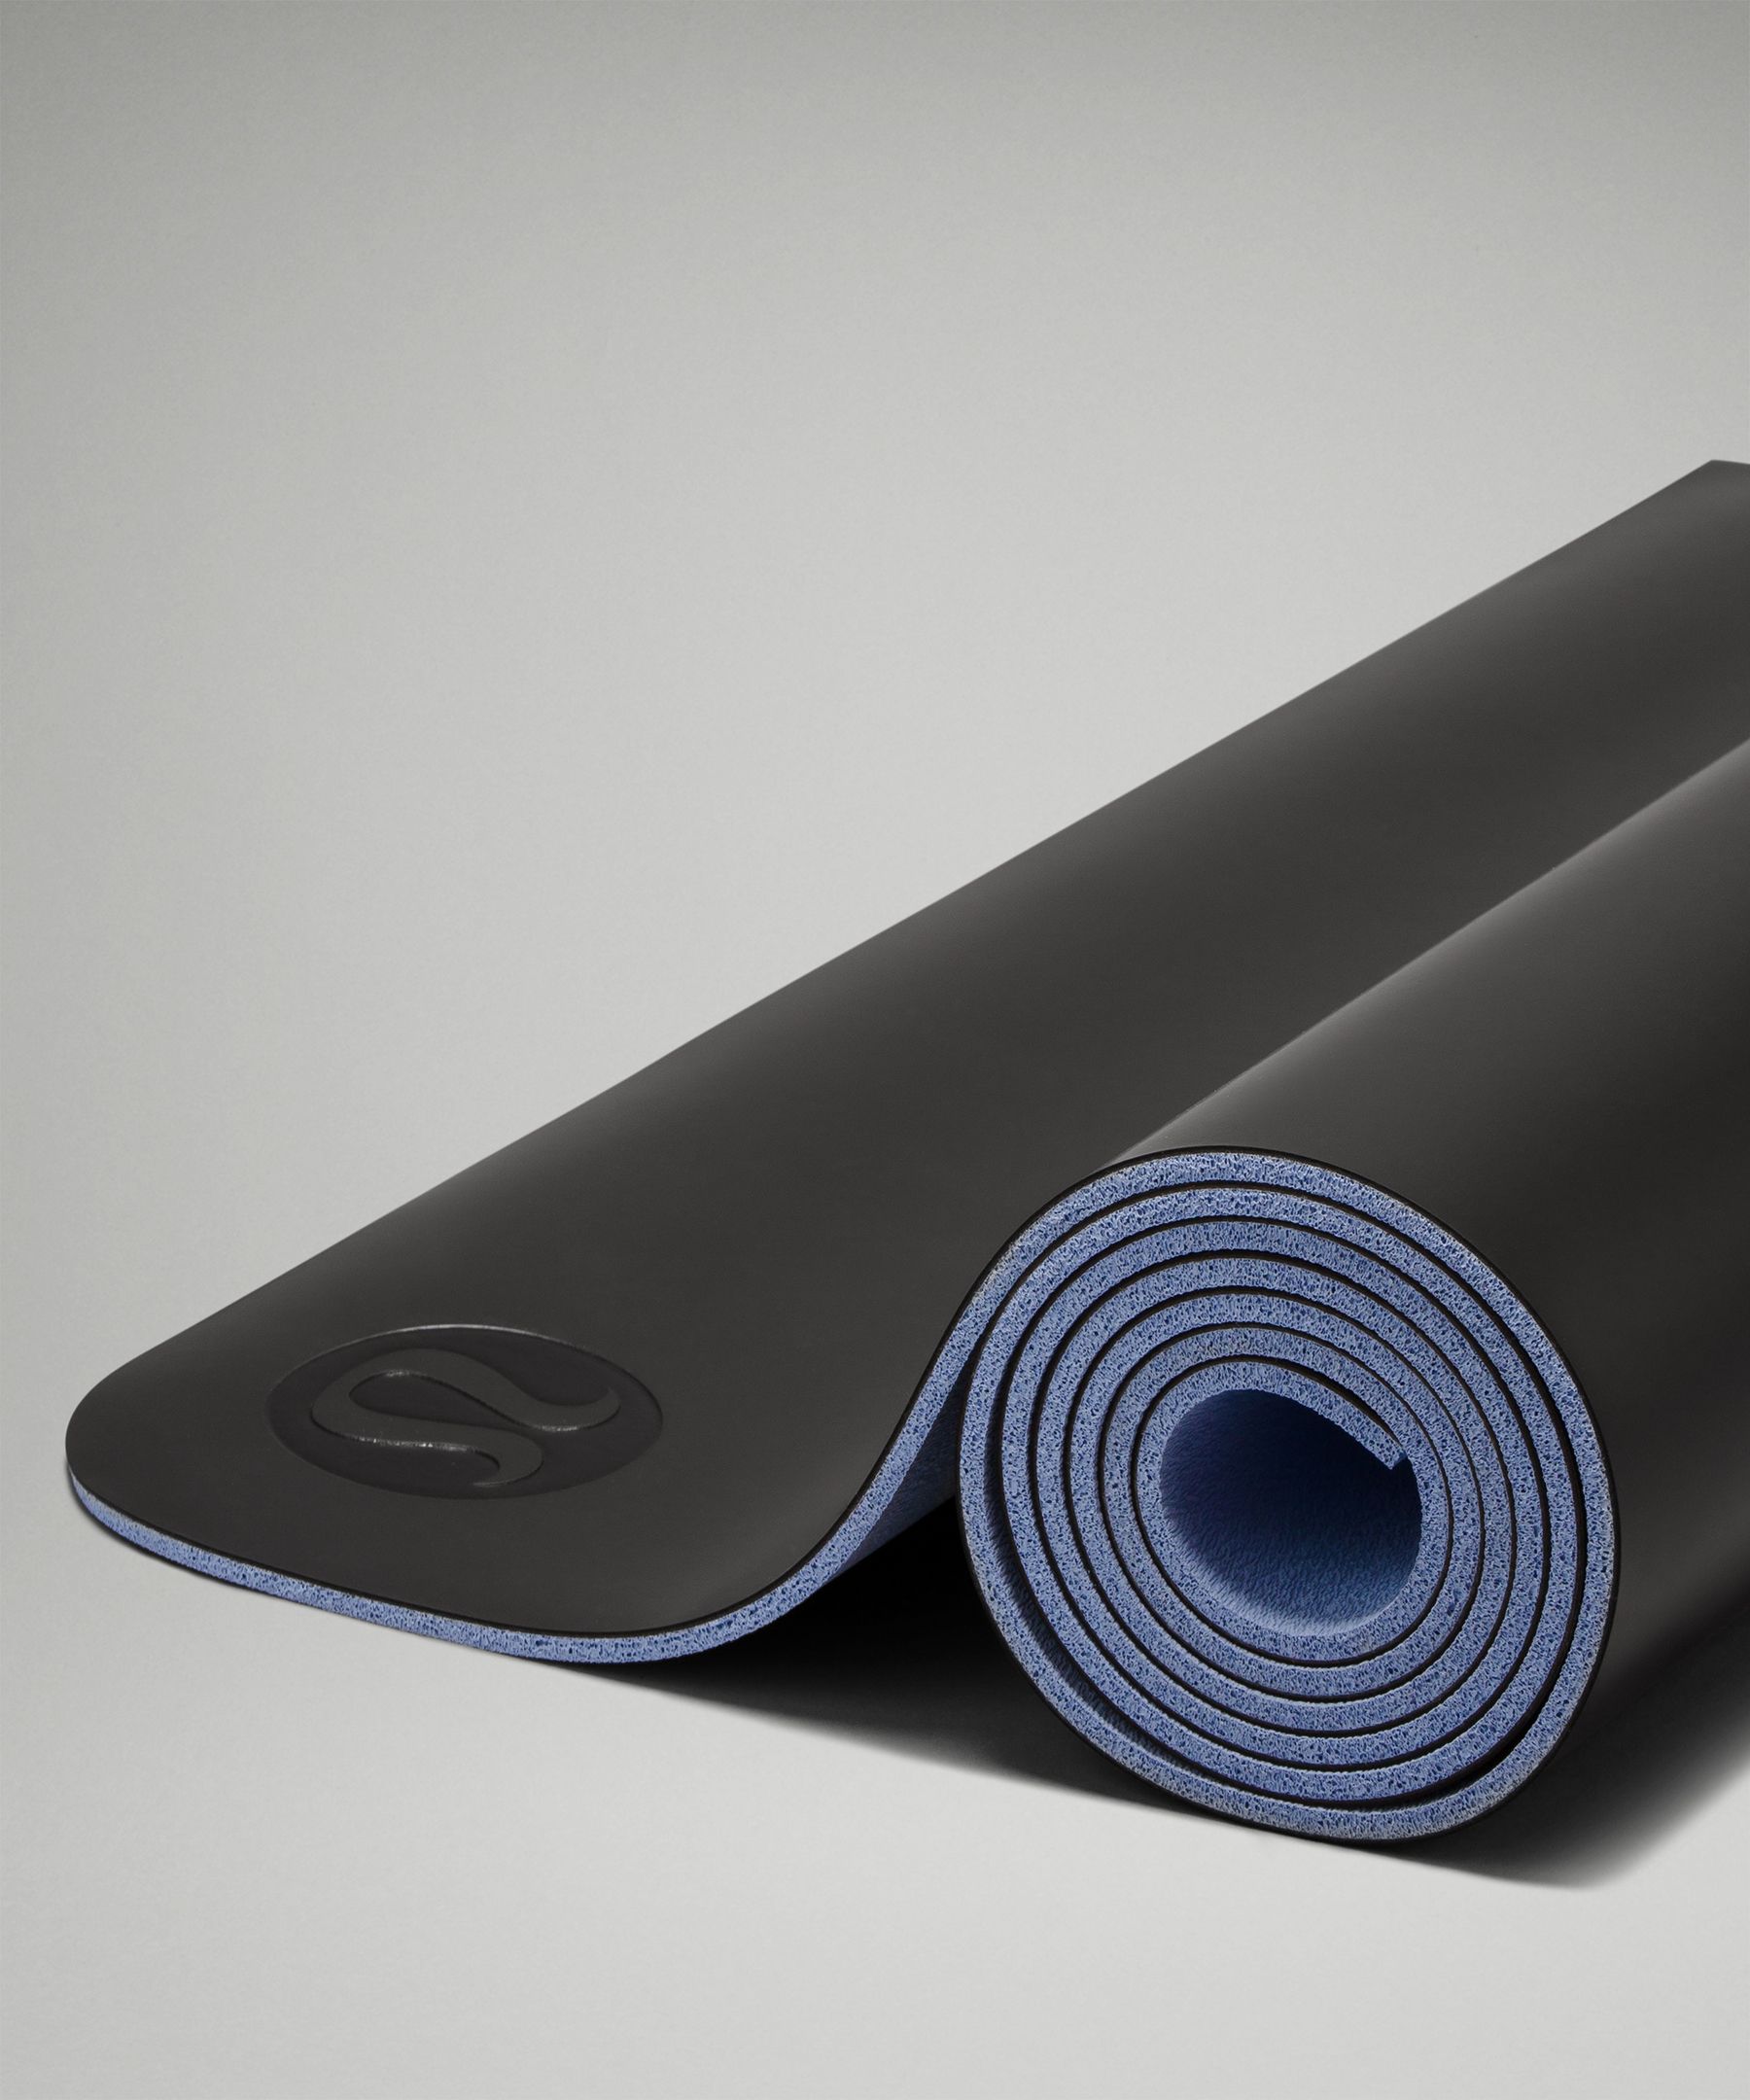 5mm Professional Yoga Mat with Yoga Cat Bag & Strap - Shop Tumaz